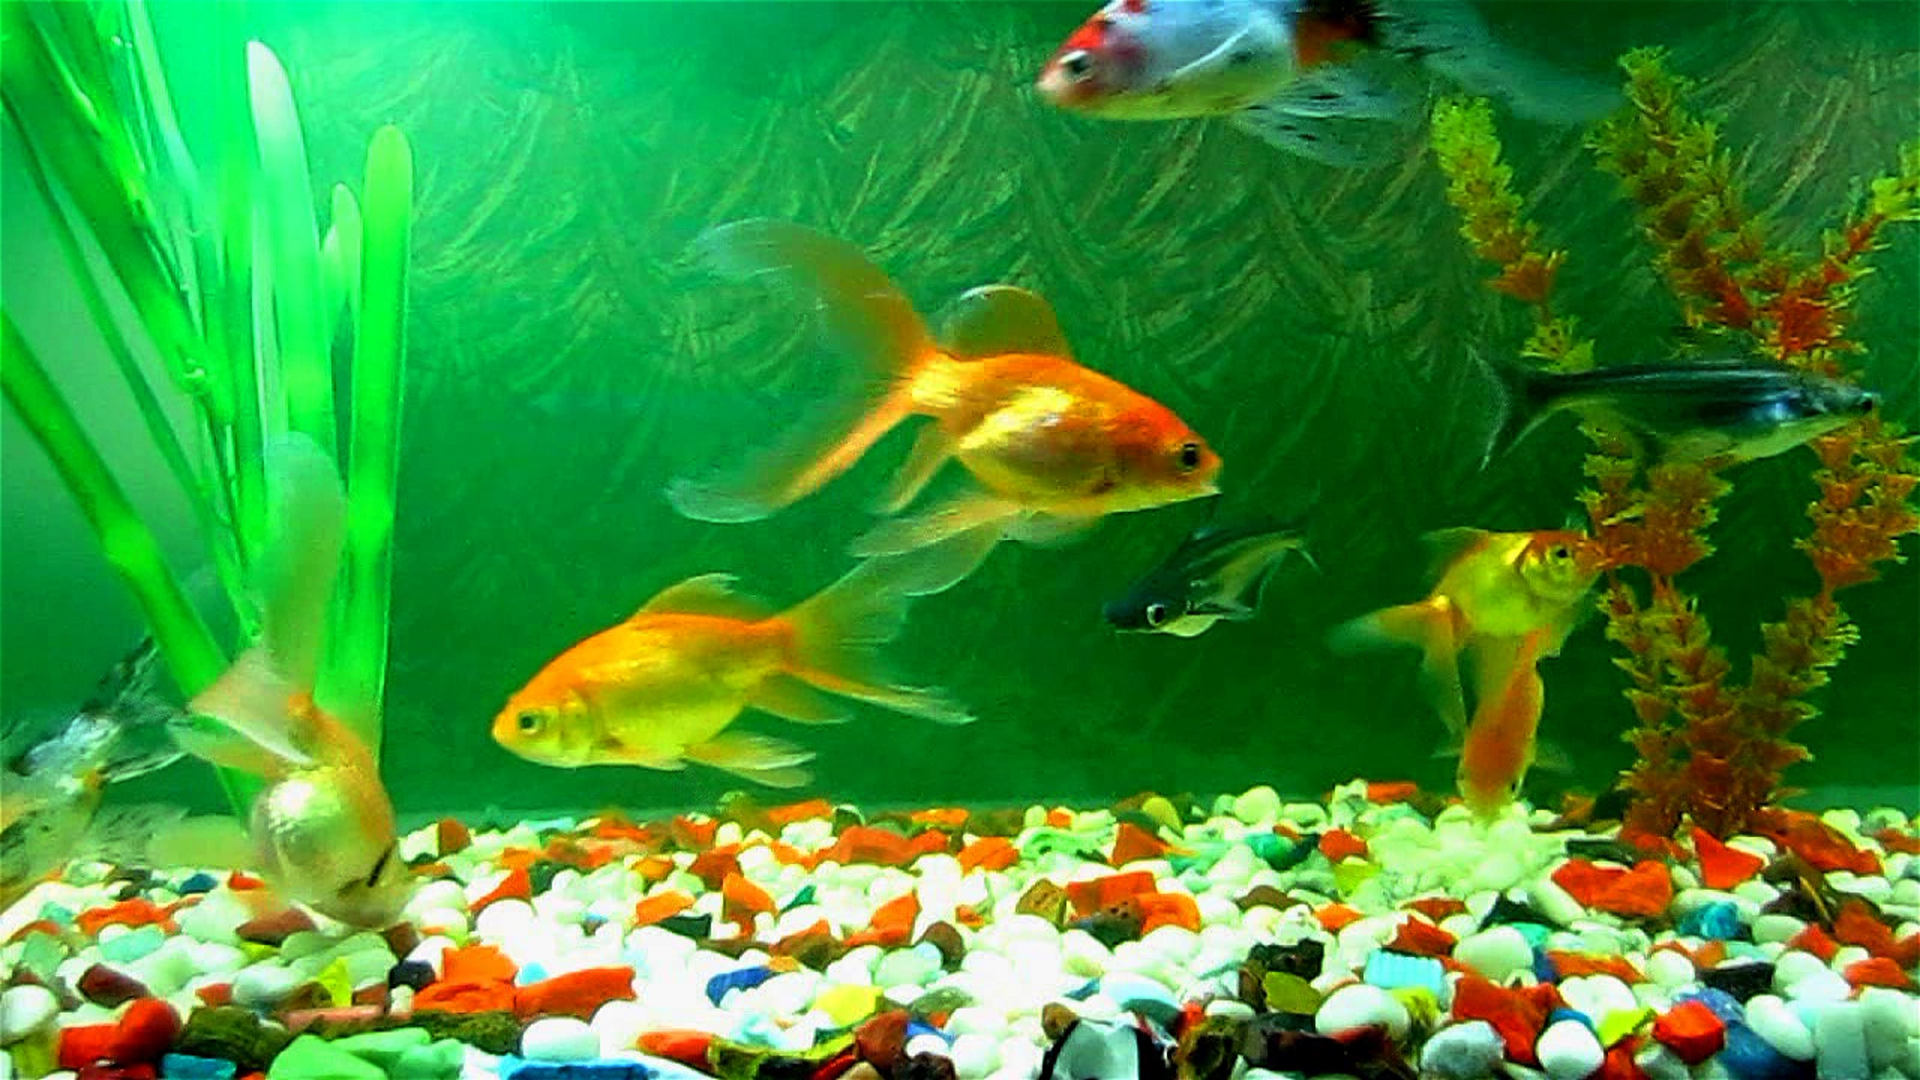 Free photo: Aquarium fish - Fish, Image, Nature - Free Download - Jooinn